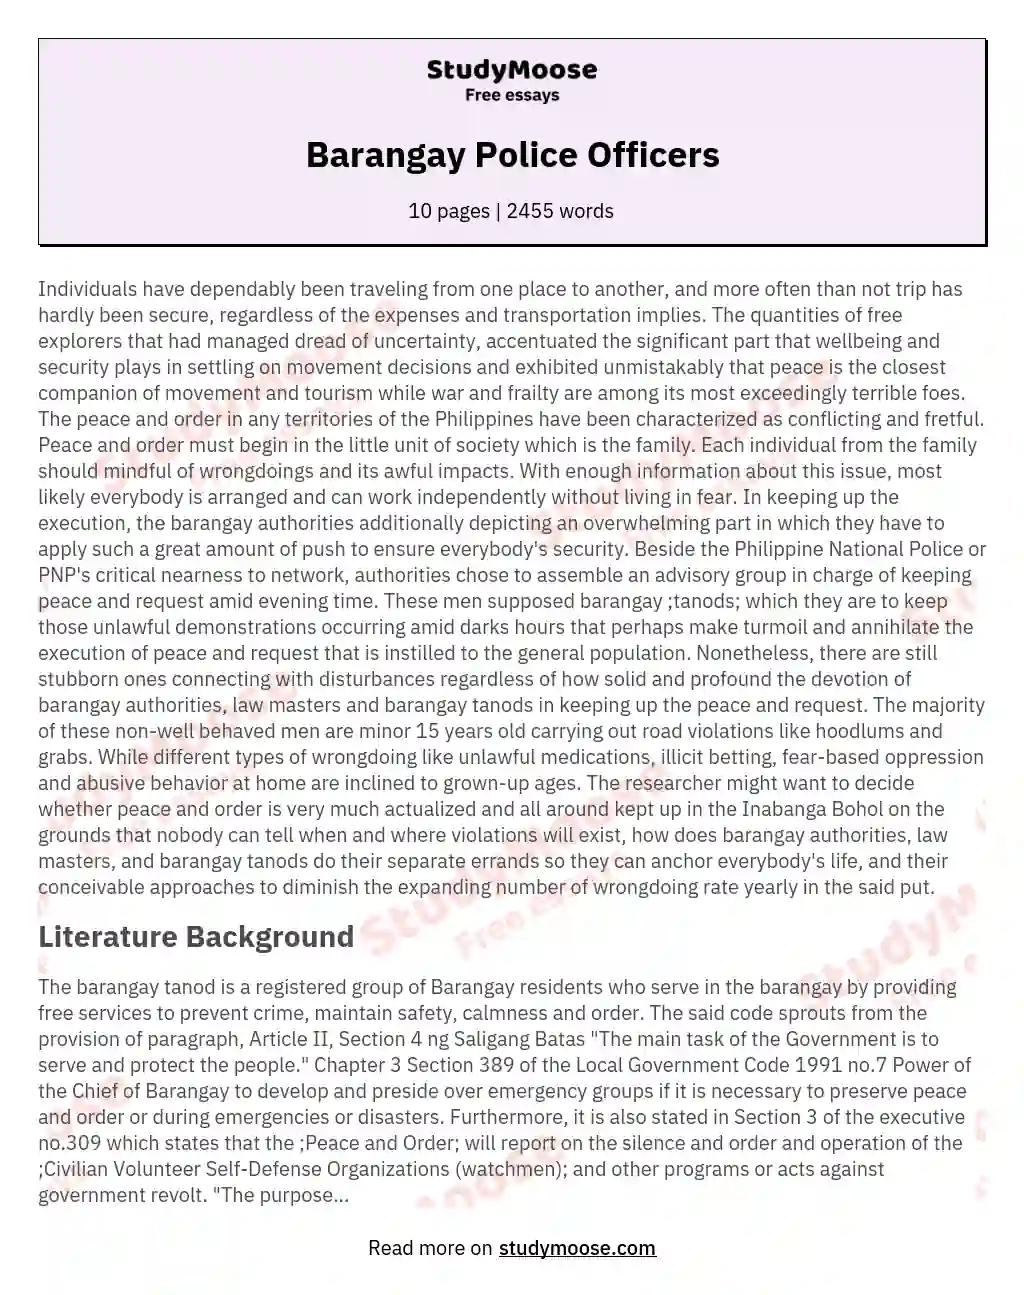 Barangay Police Officers